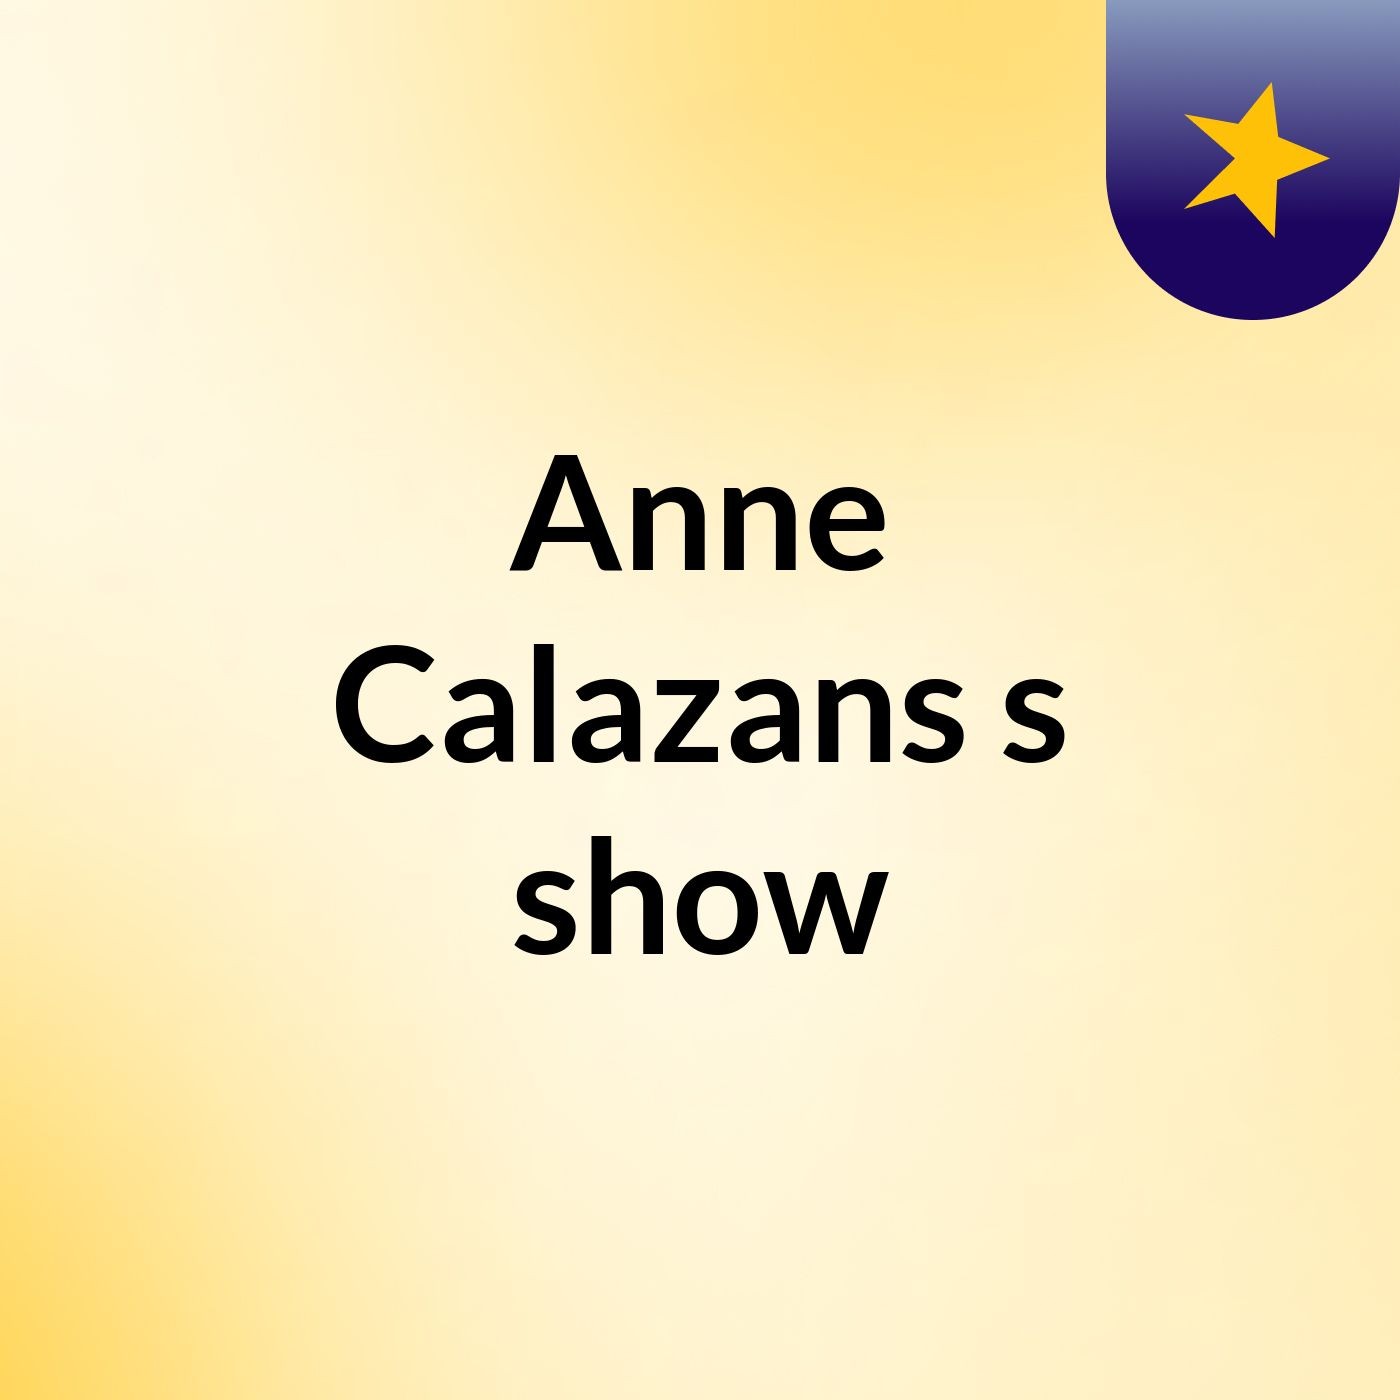 Anne Calazans's show